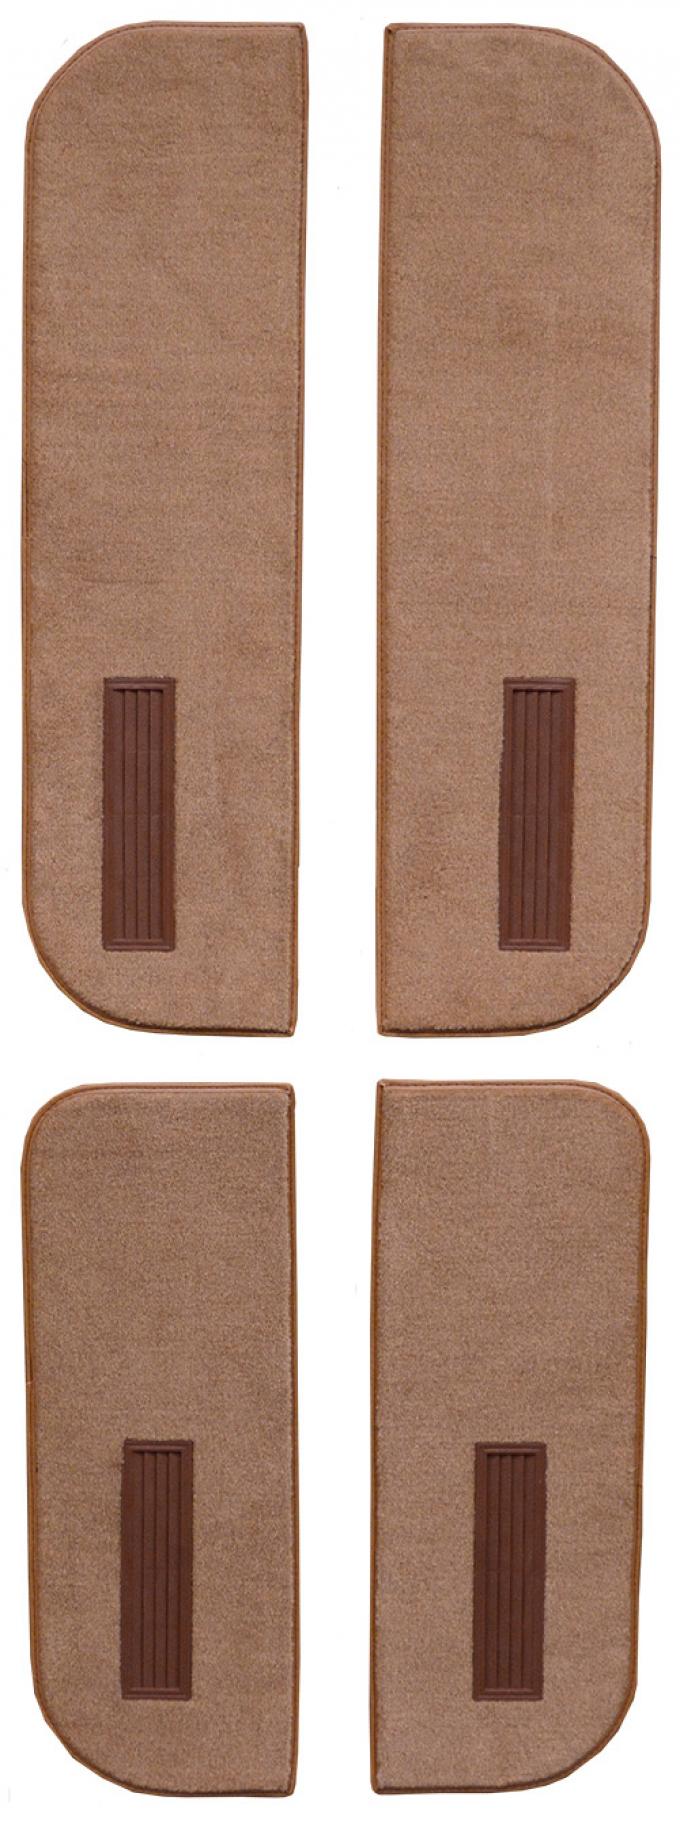 ACC 1973 Chevrolet K10 Suburban Door Panel Inserts on Cardboard w/Vents 4pc Loop Carpet